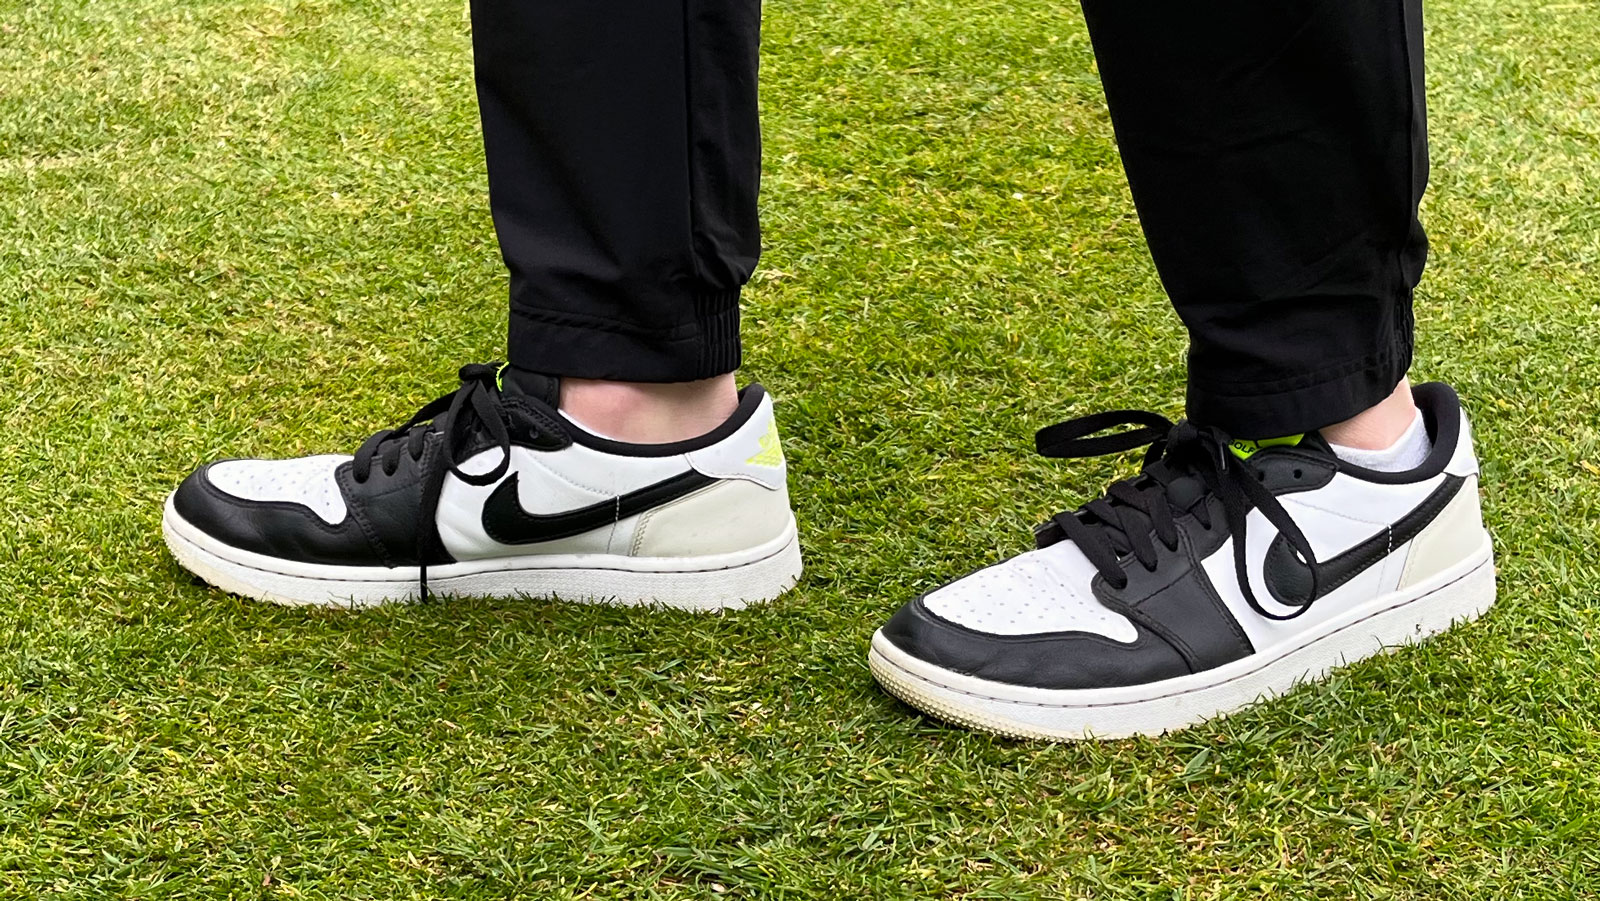 Nike Air Jordan Low 1 G Golf Shoe Review | Golf Monthly